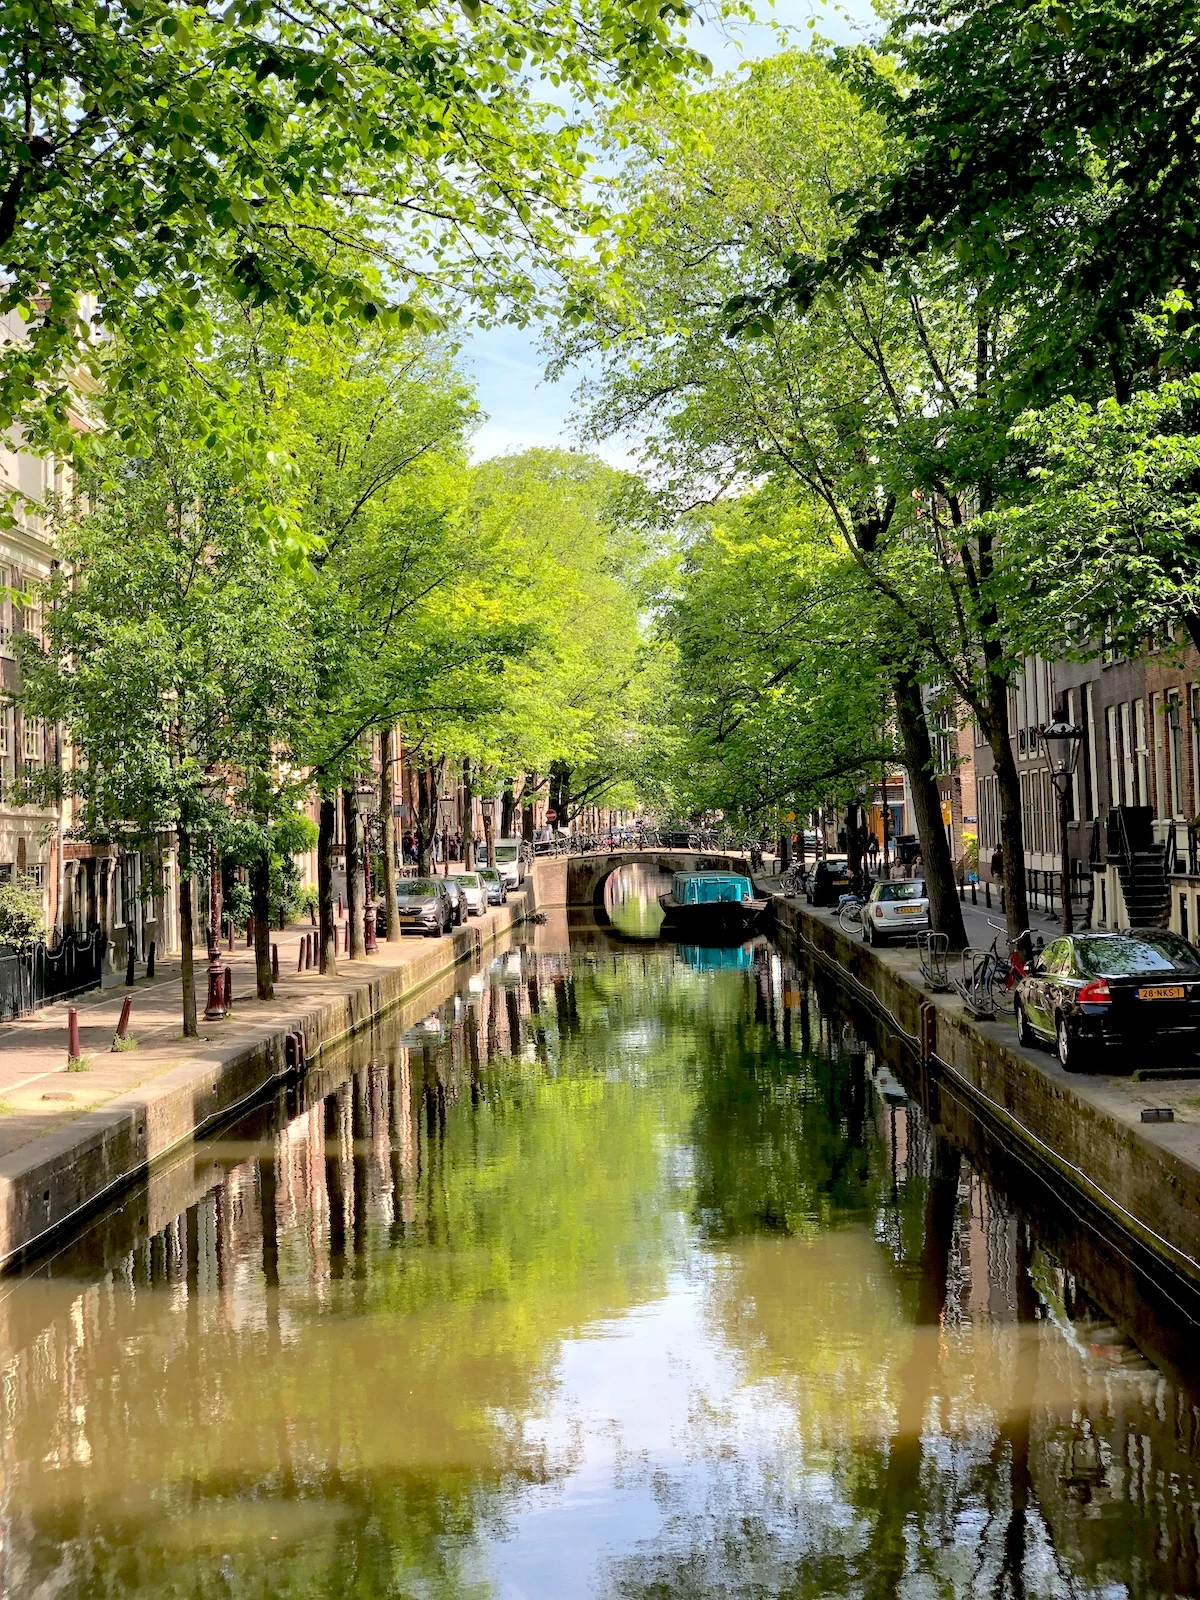 Shadowy Canal of Amsterdam